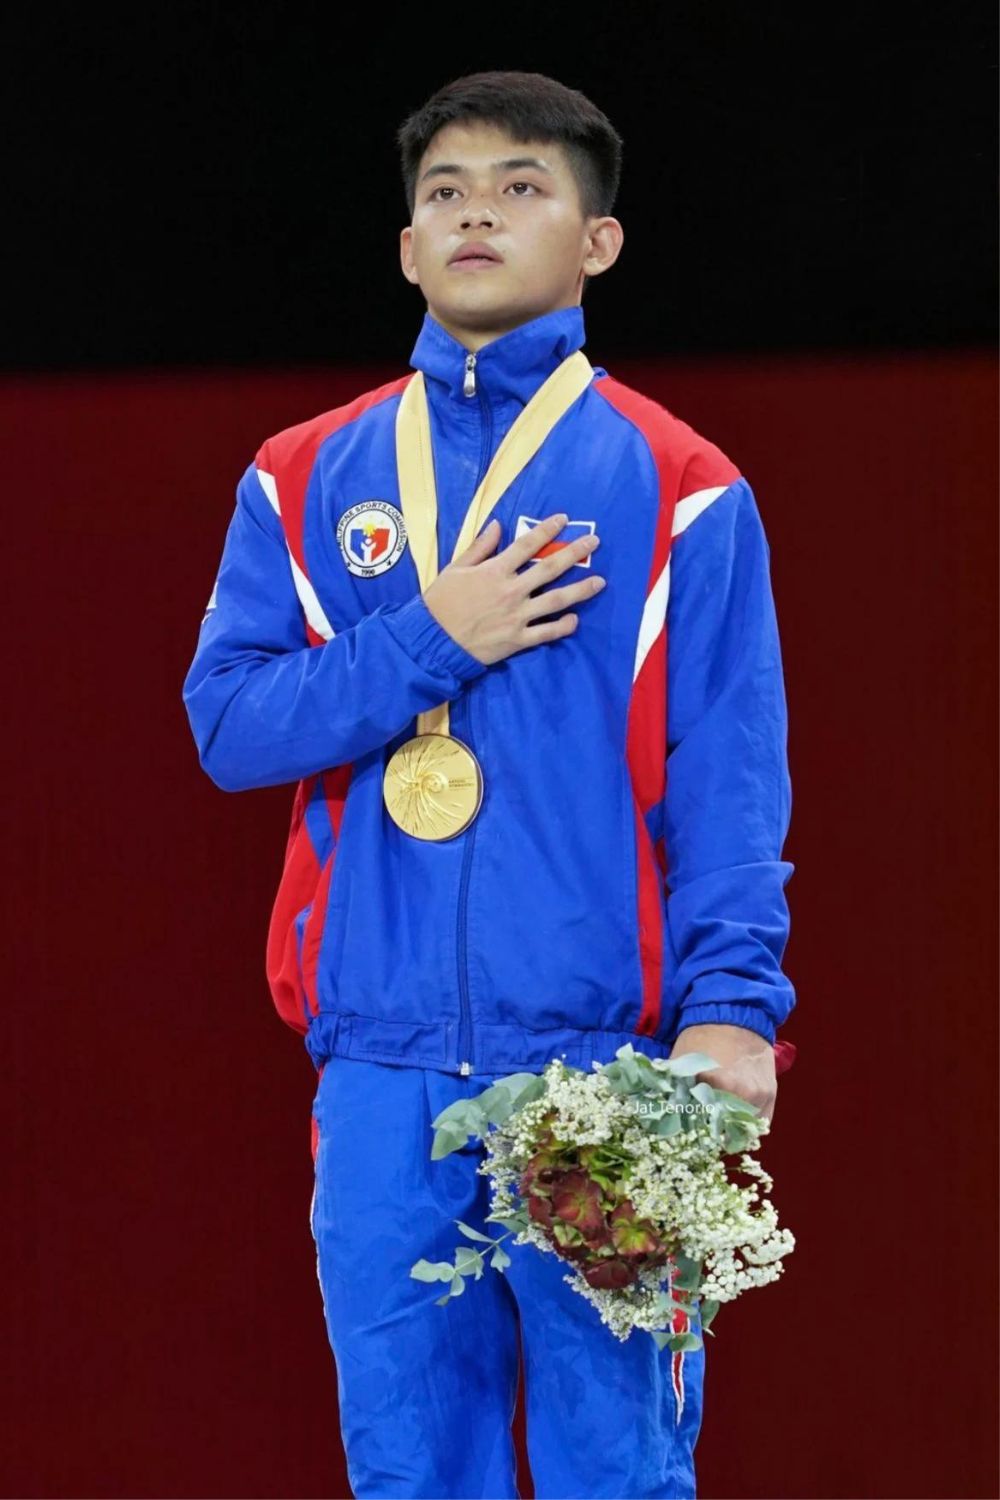 Carlos Yulo, 2019 World Artistic Gymnastics Championships' Gold Medalist (Source Pinterest)